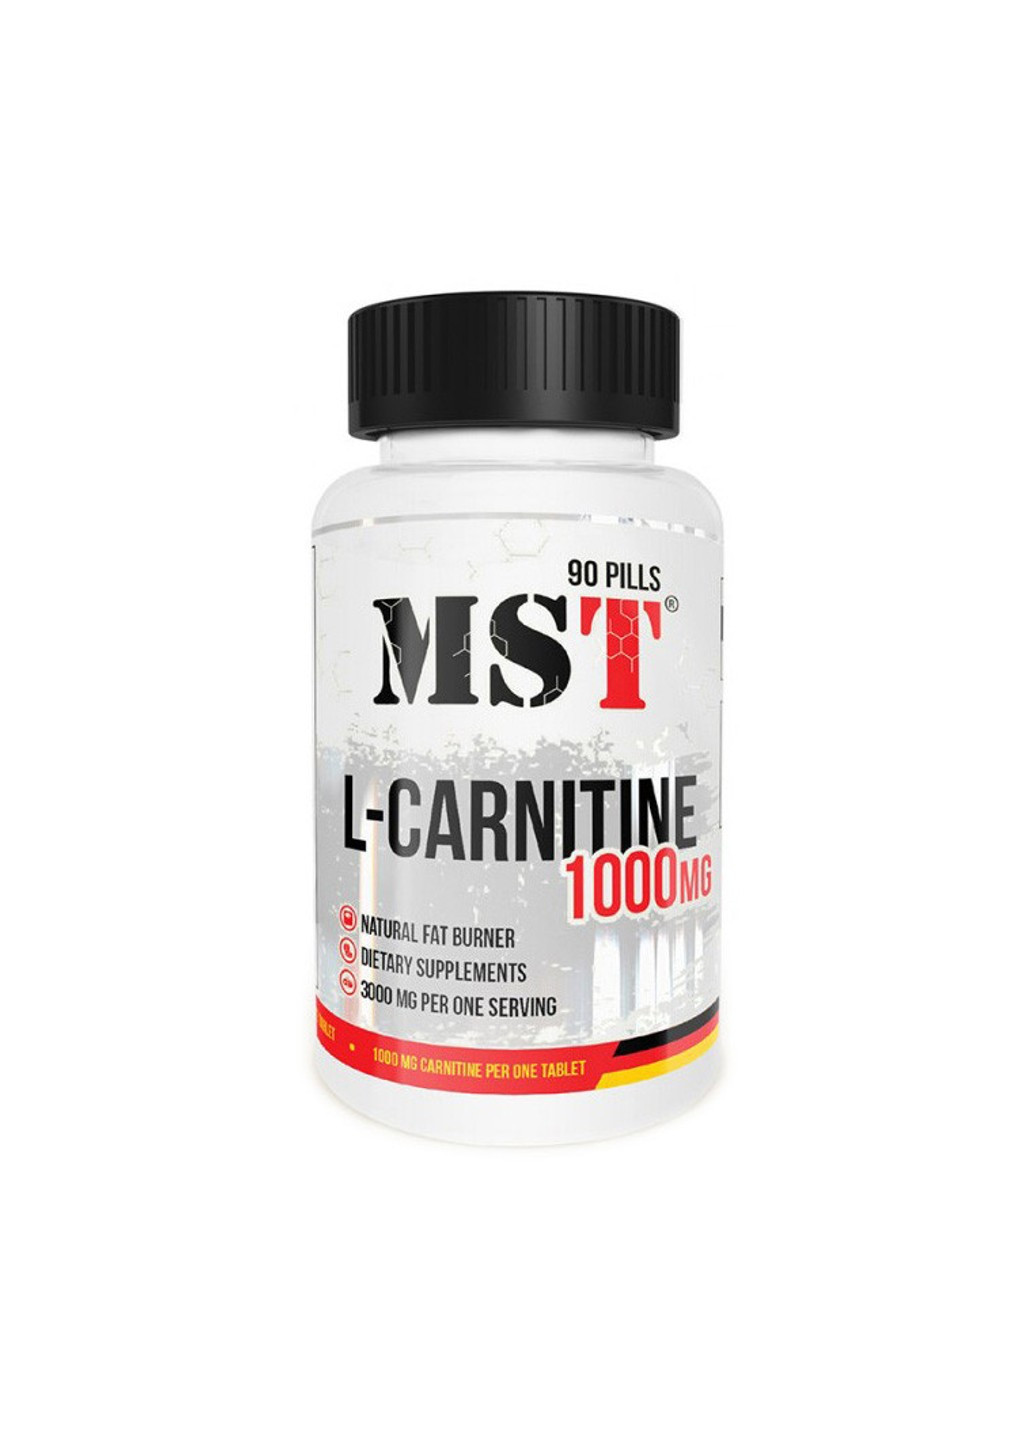 Л-карнитин L-Carnitine 1000 (90 pills) мст MST (255363564)